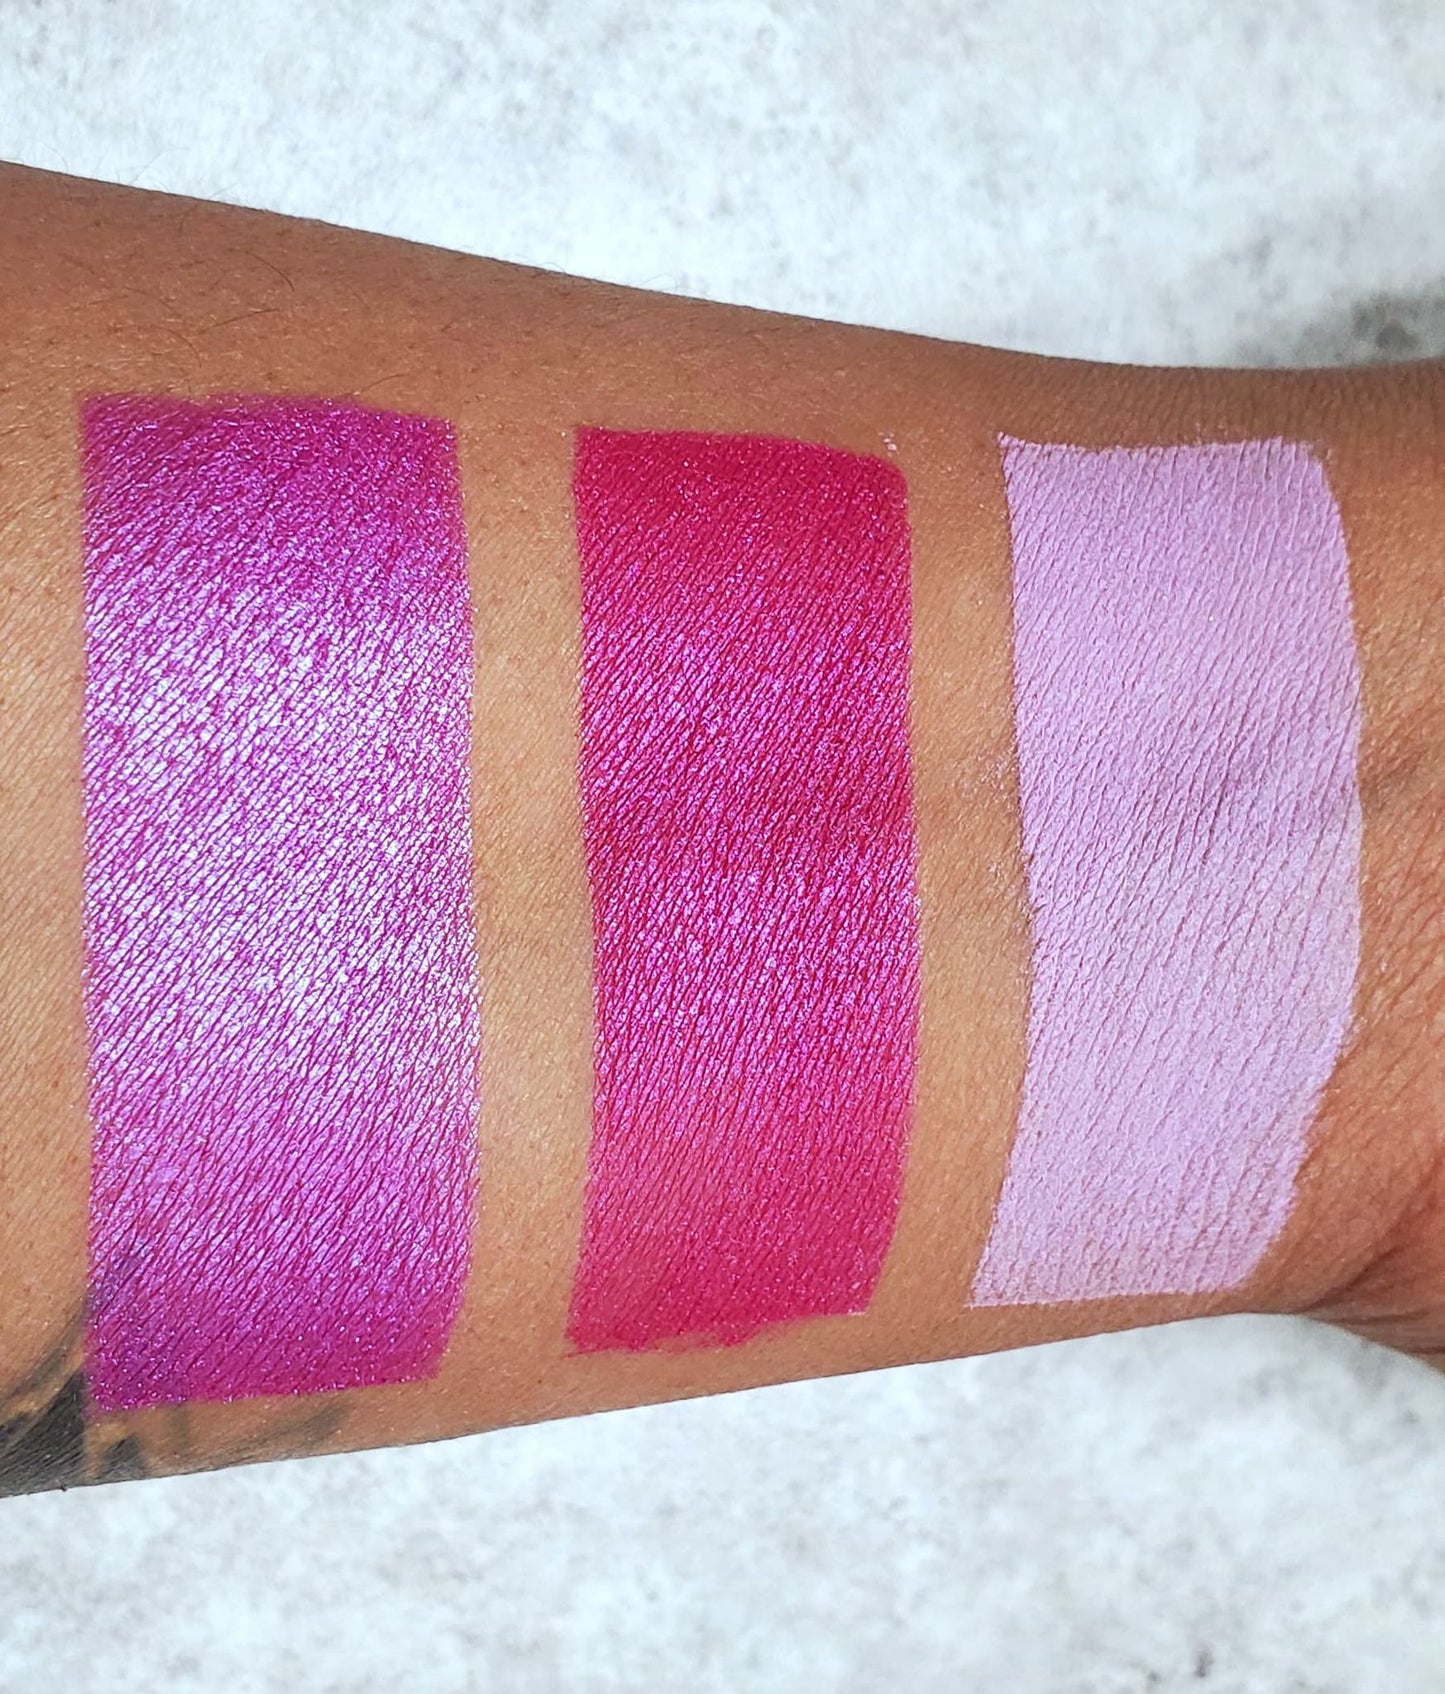 Bossy - Eyeshadow Duochrome Pink Violet